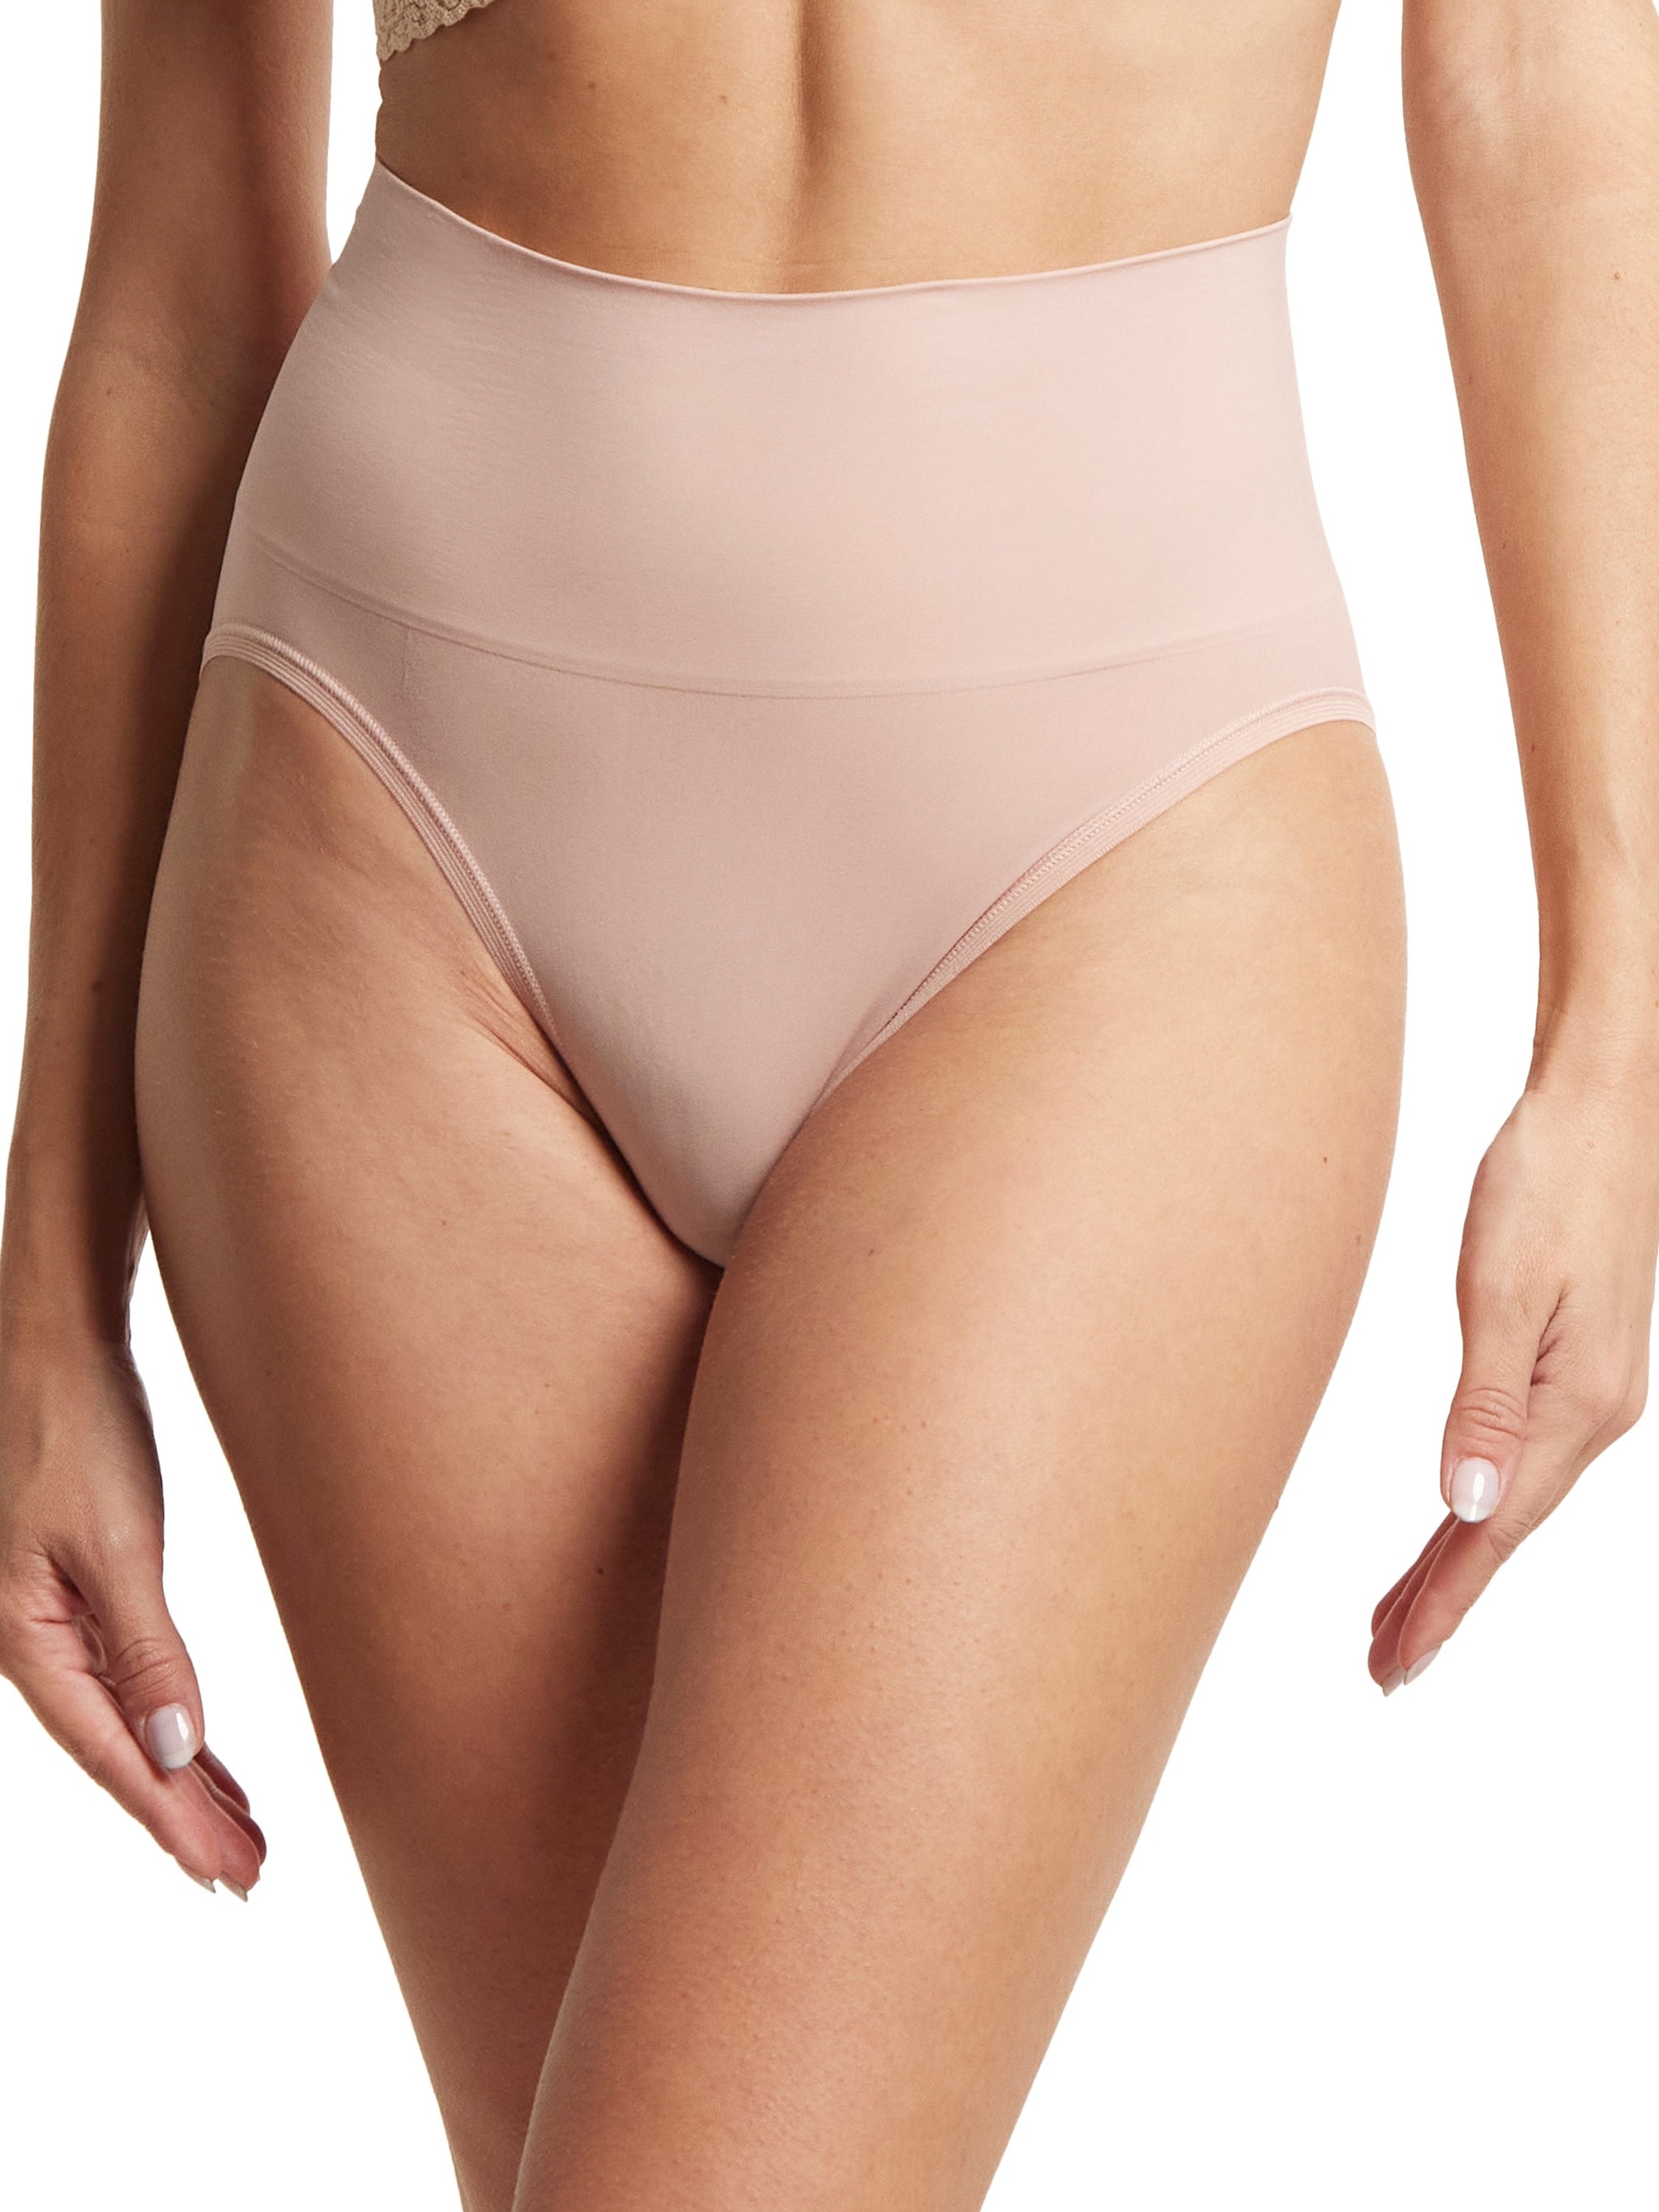 SEXY LINGERIE FLOWER Transparent Underwear Women Thongs Briefs